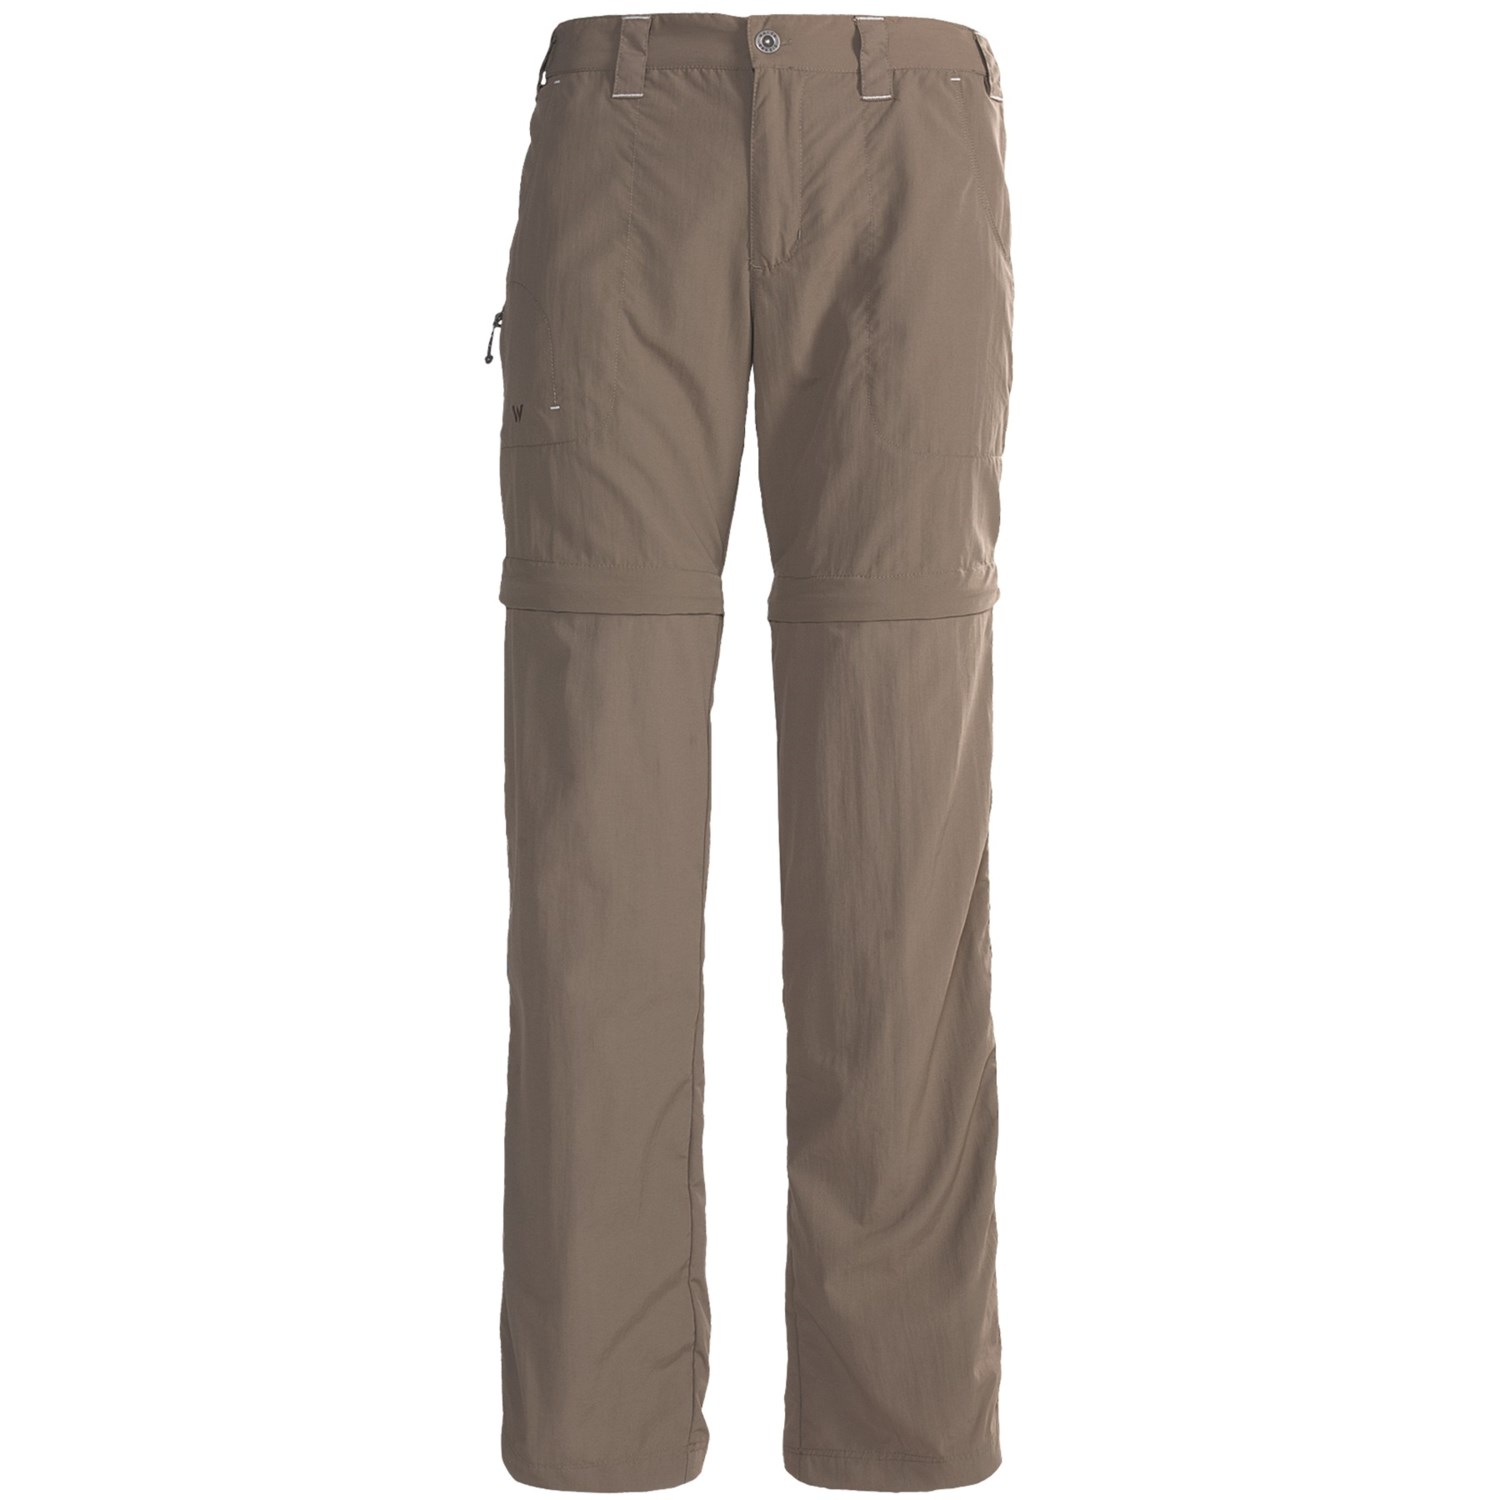 White Sierra Convertible Sierra Point Pants (For Women) Save 40